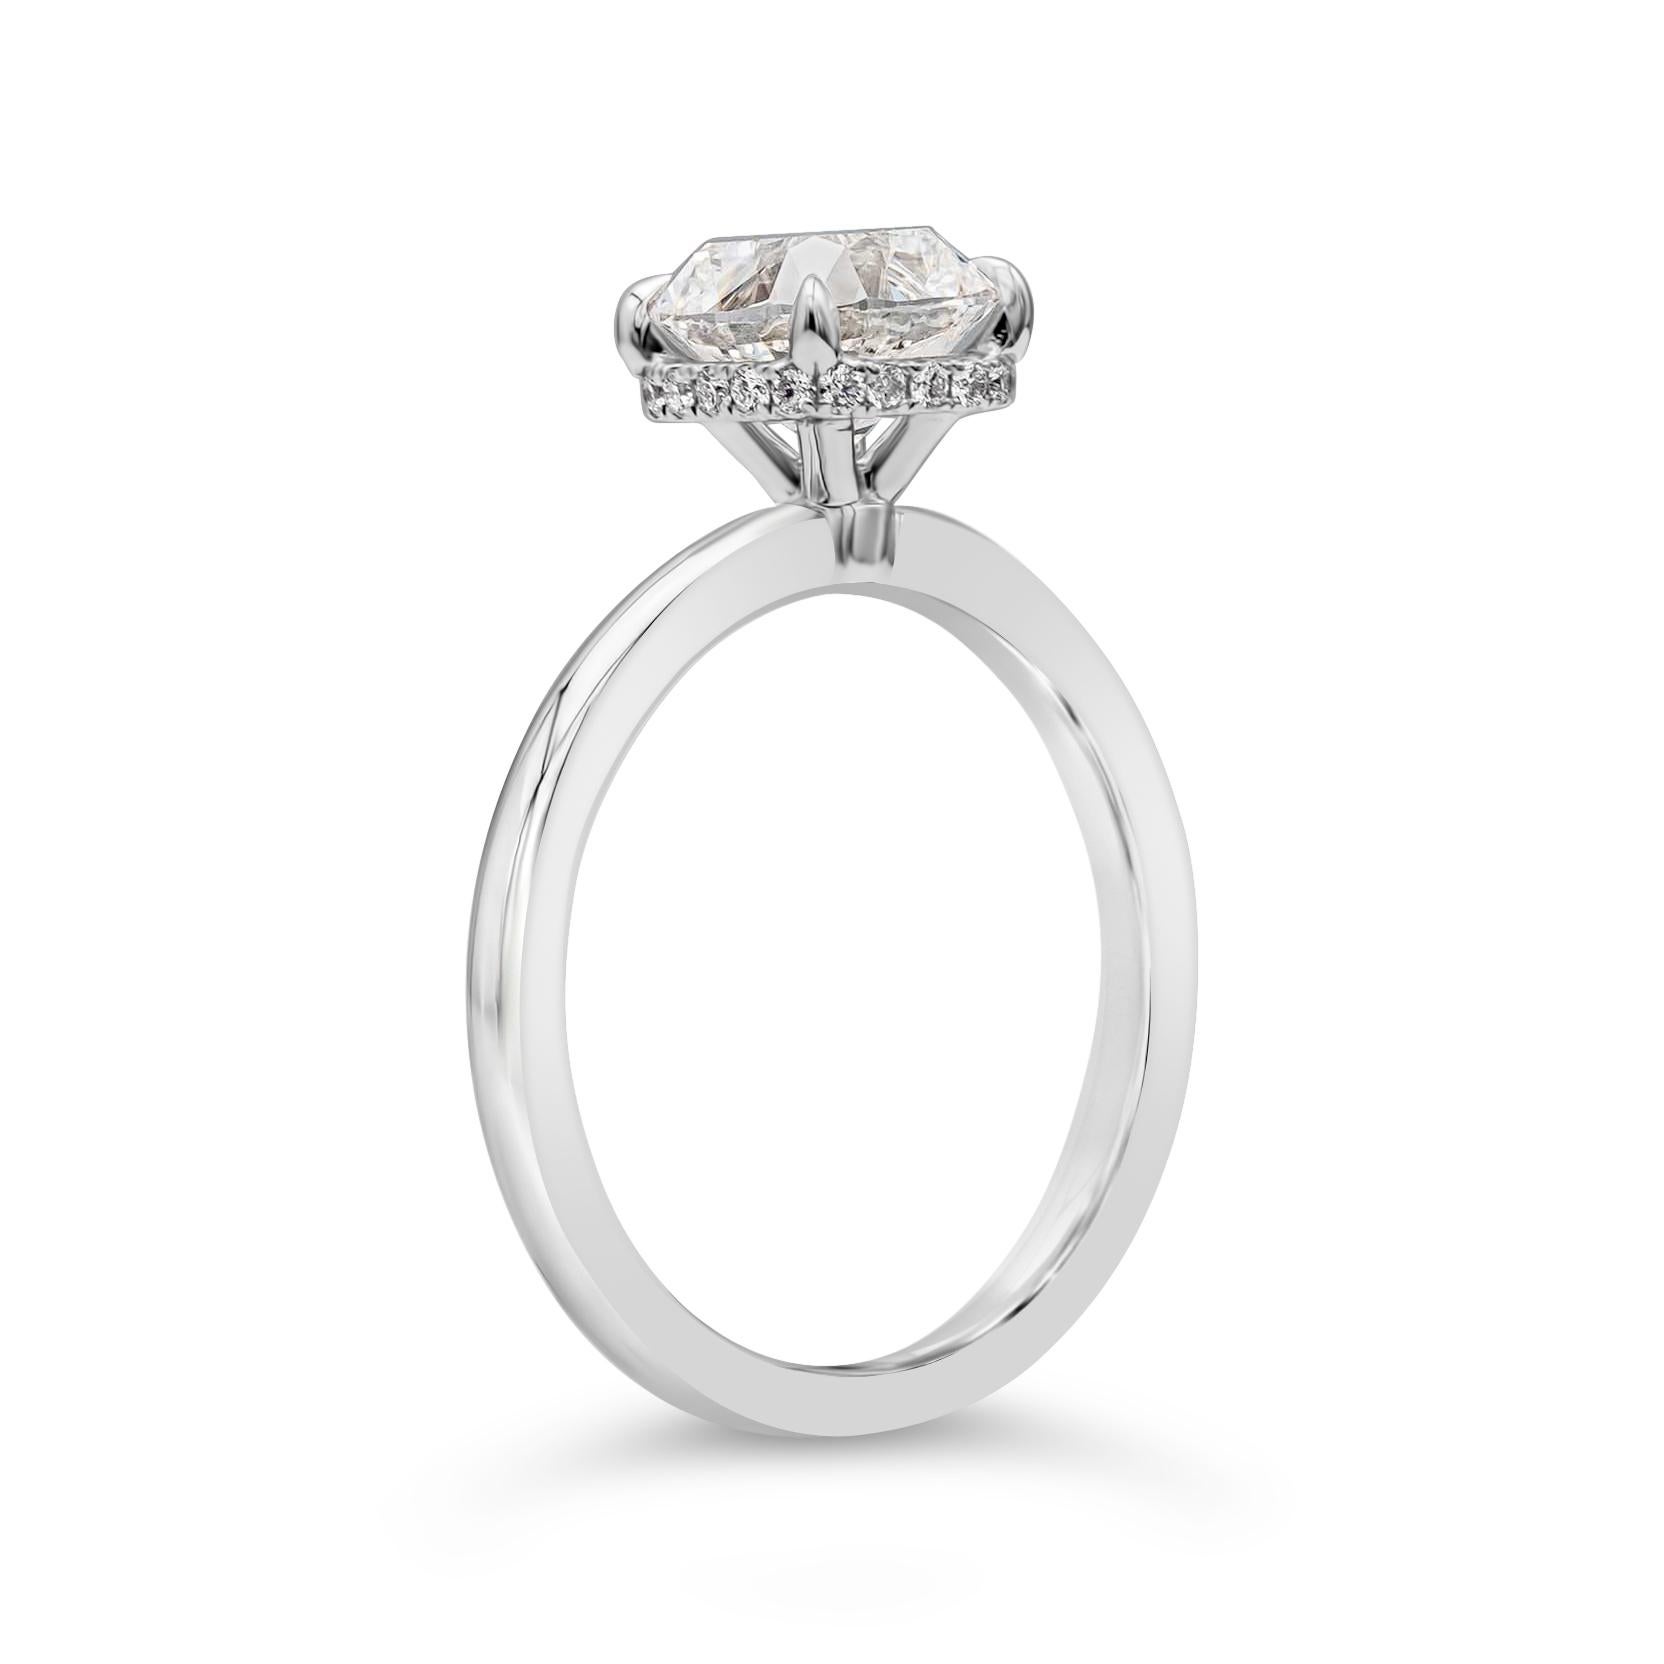 1.72 carat diamond ring